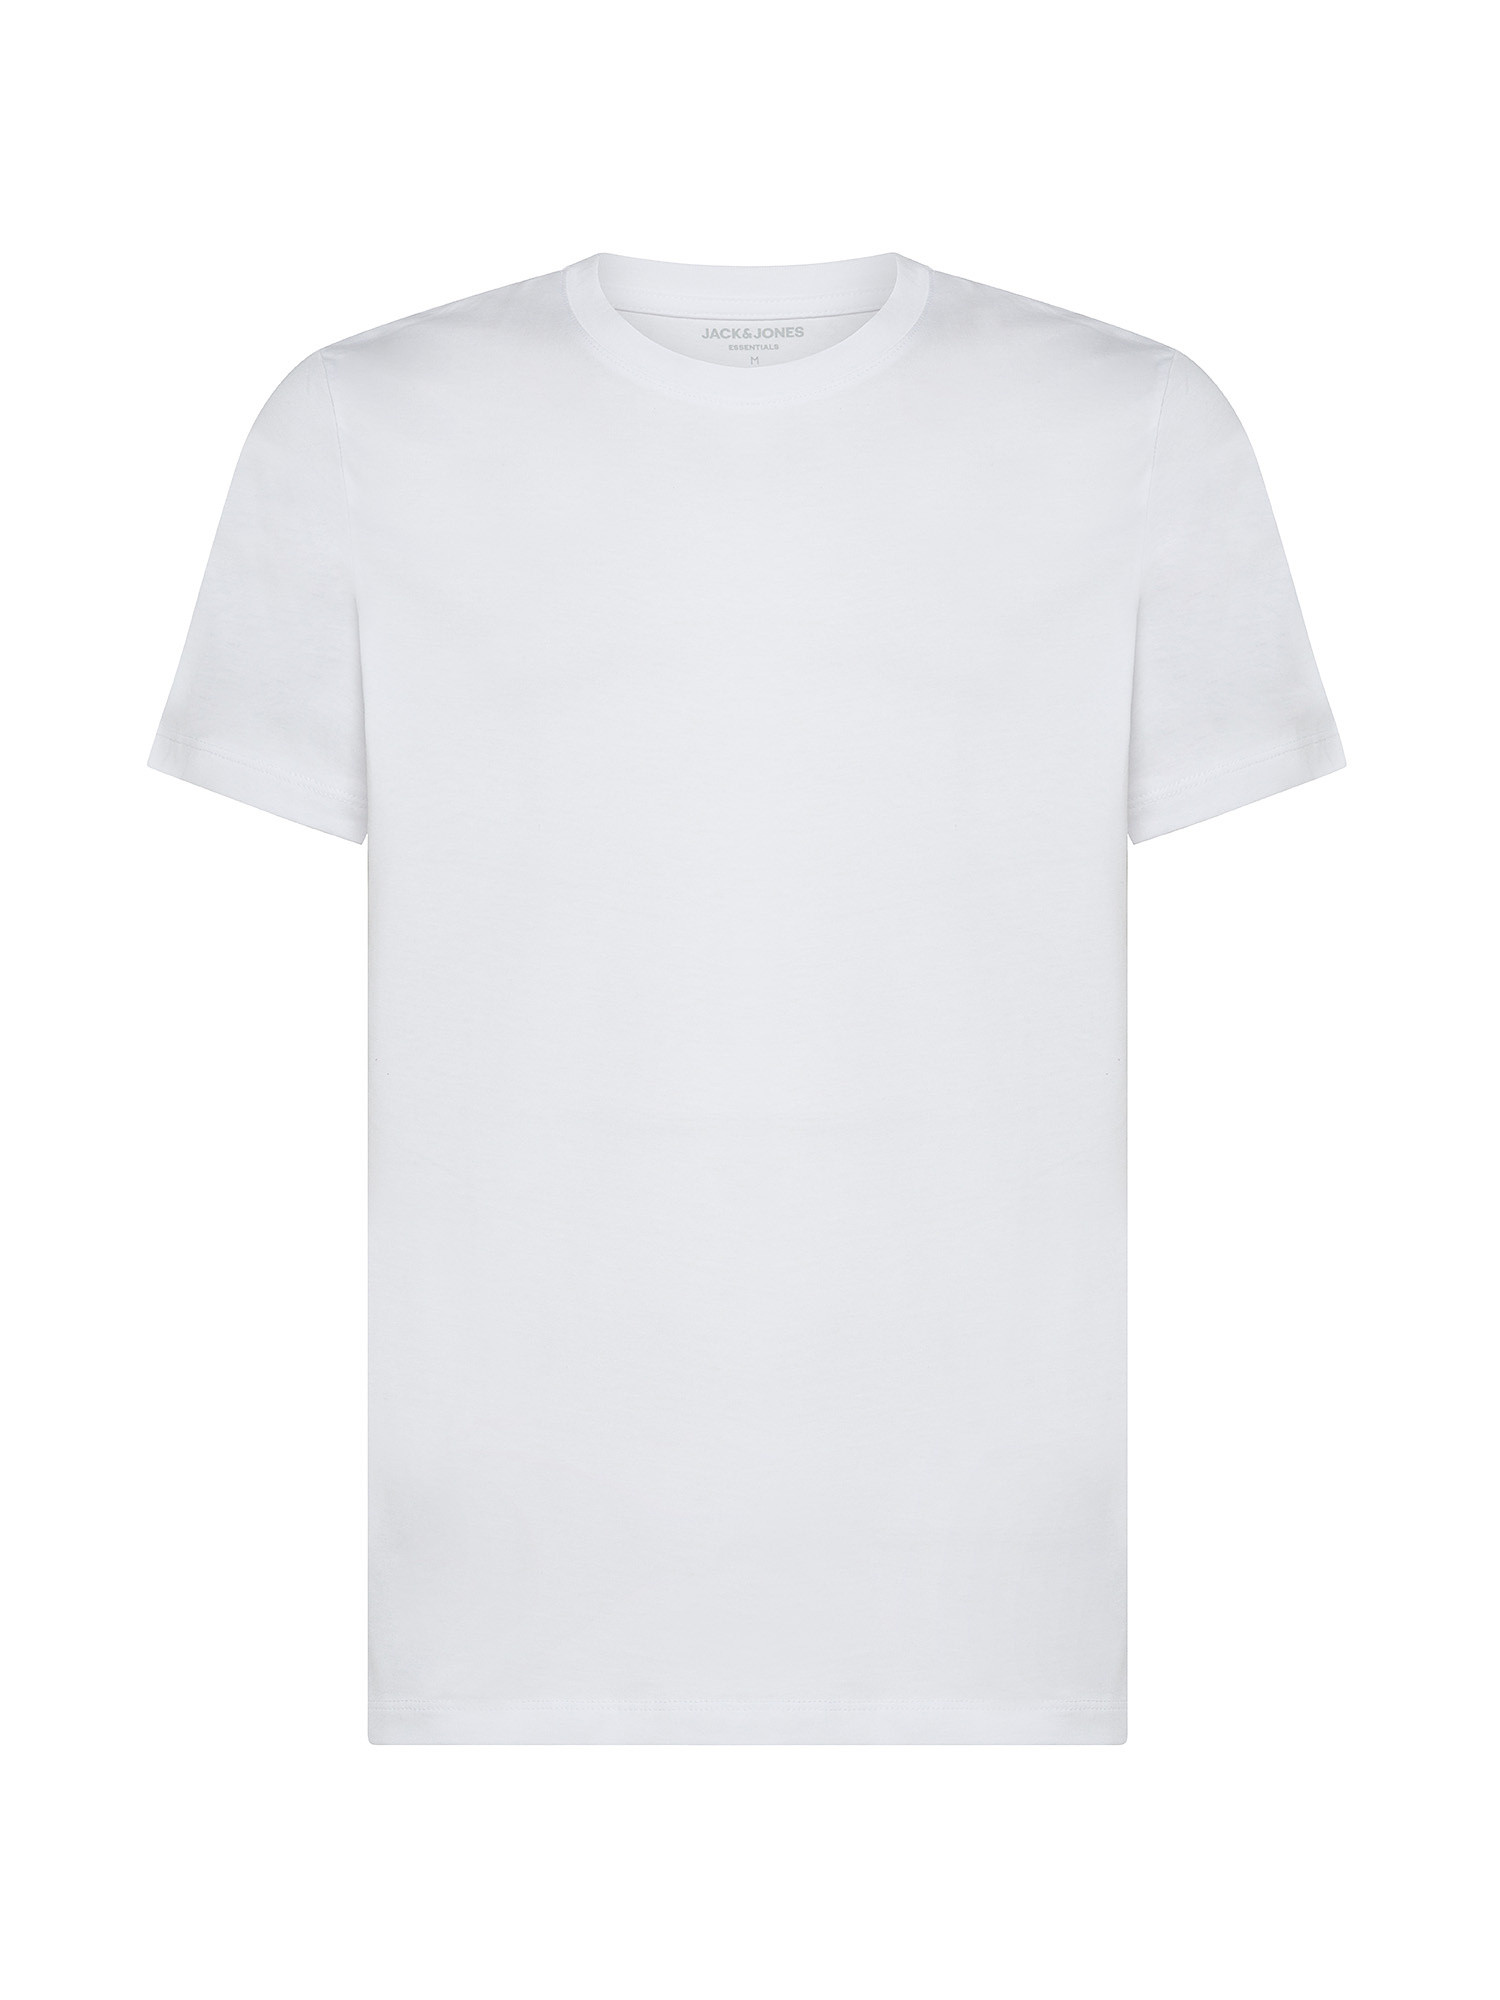 Jack & Jones - T-shirt in cotone, Bianco, large image number 0